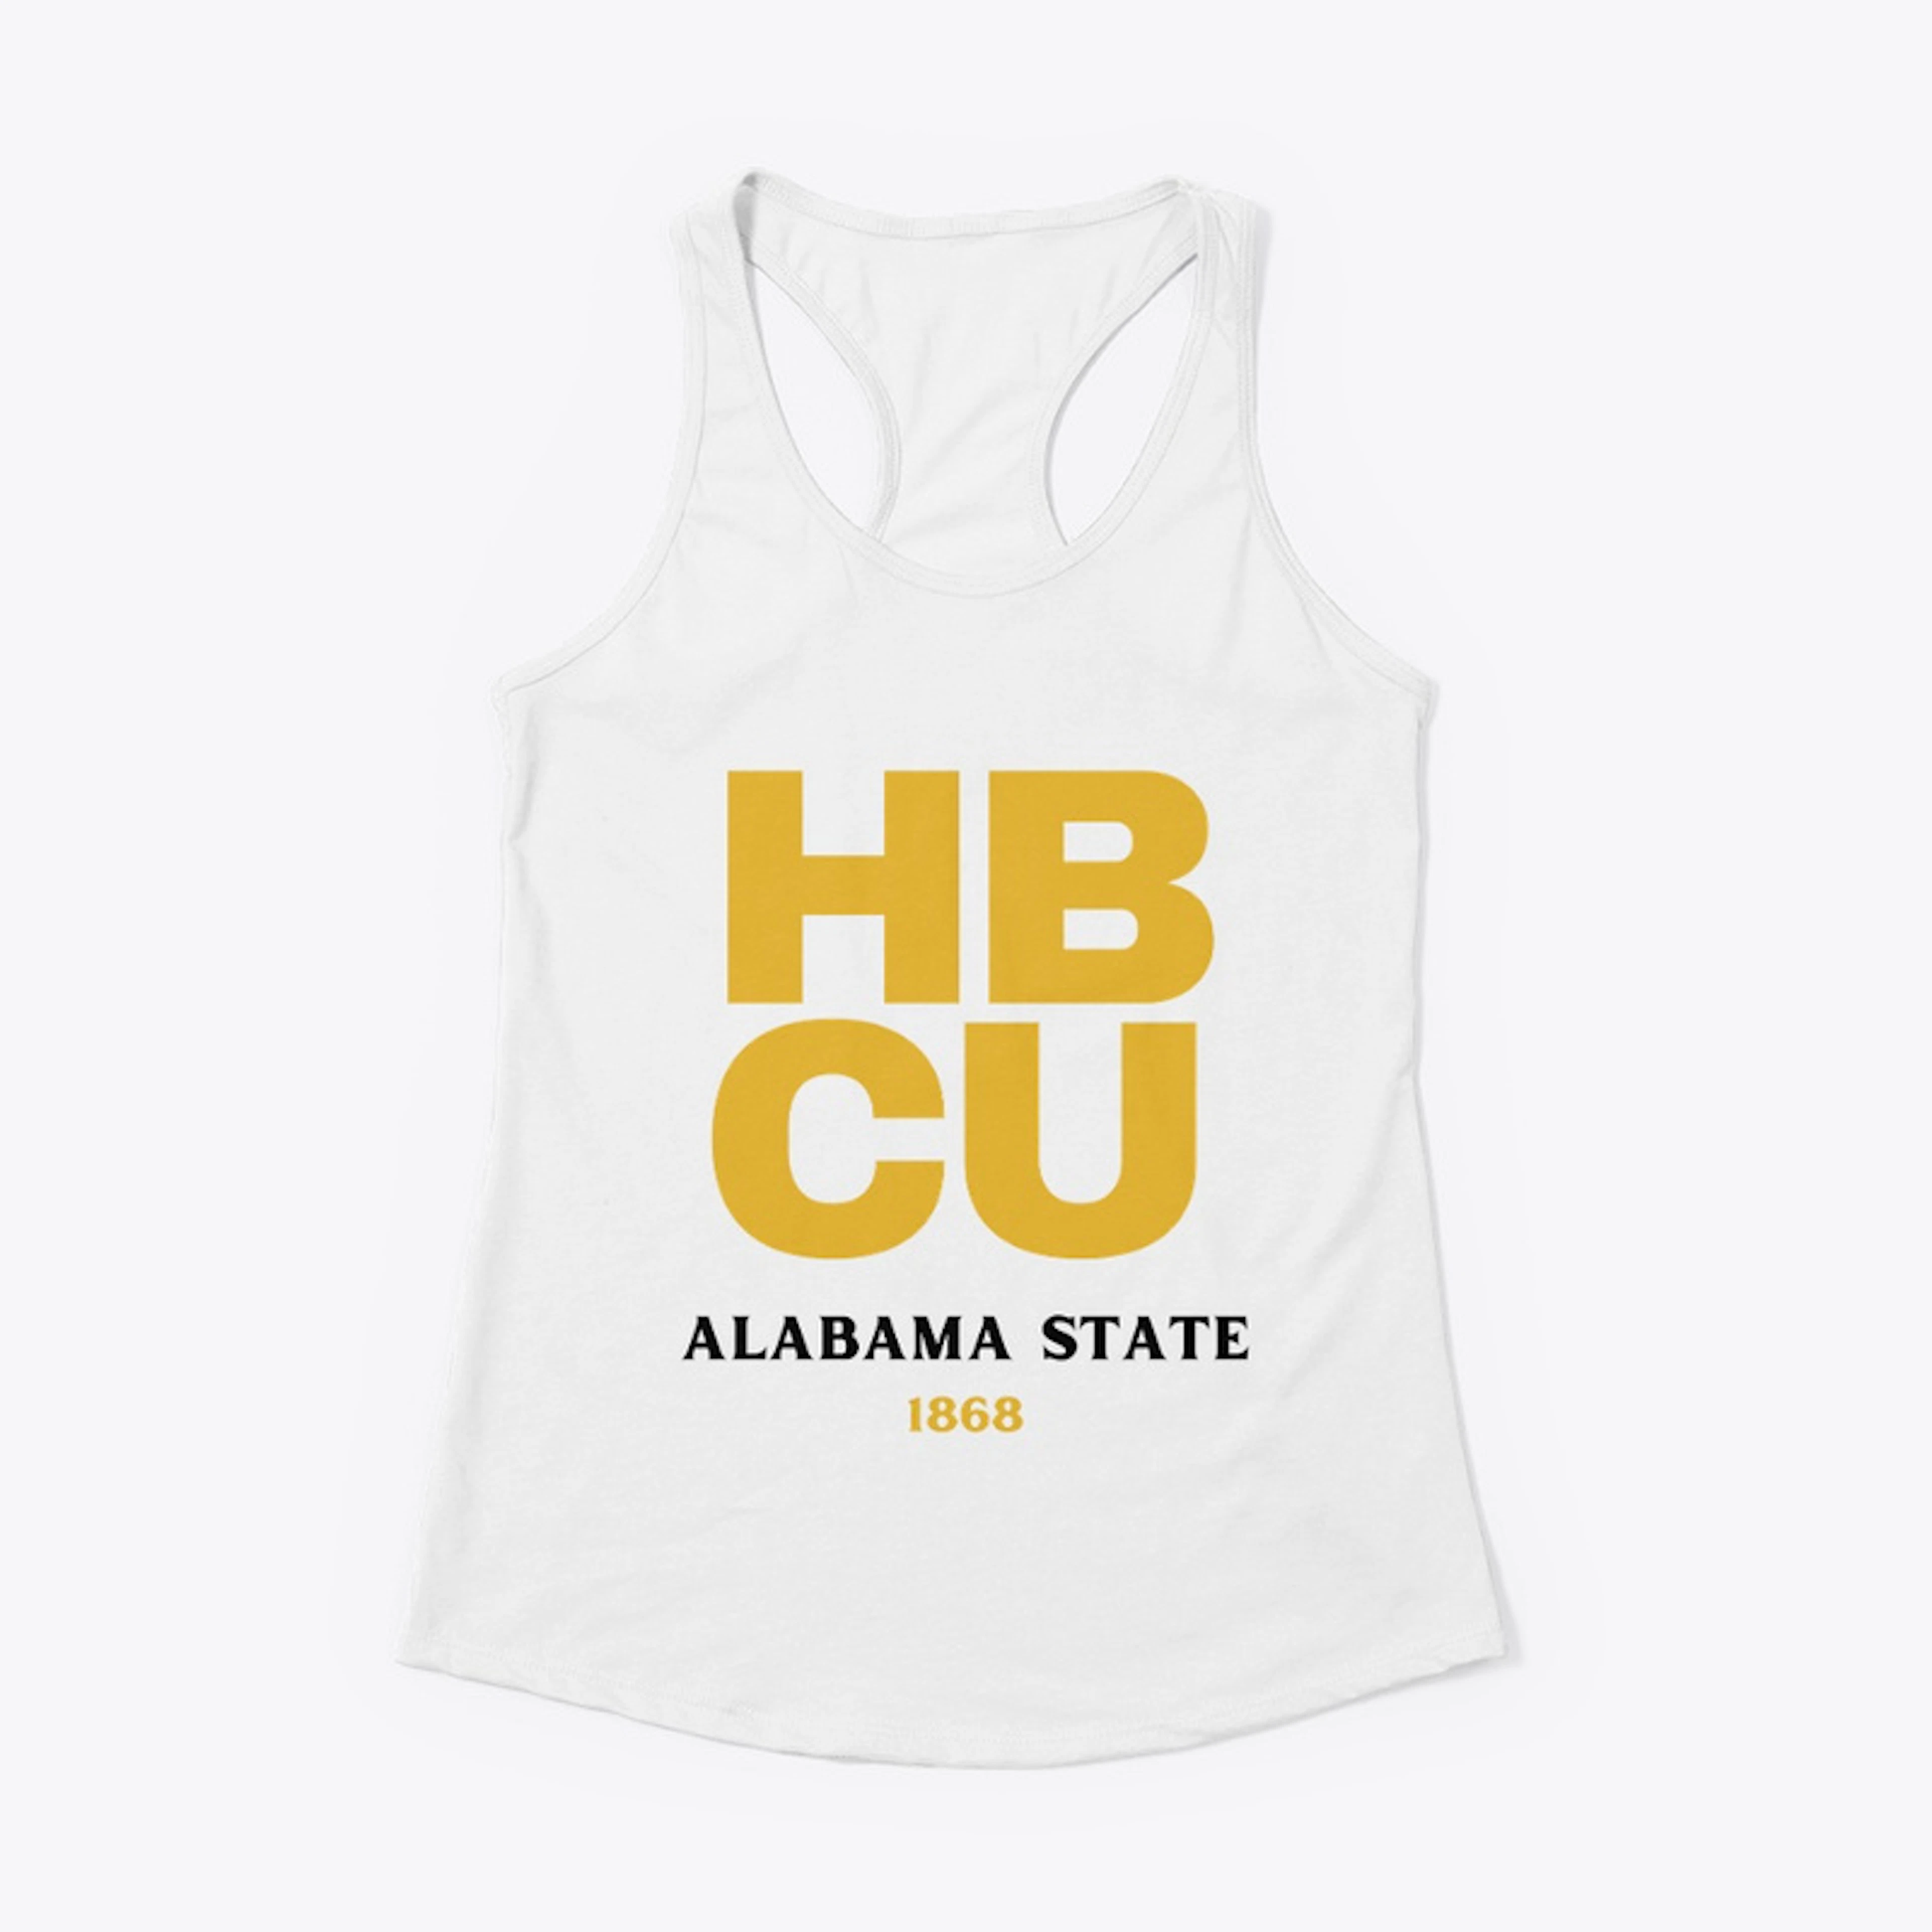 HBCU: Alabama State University